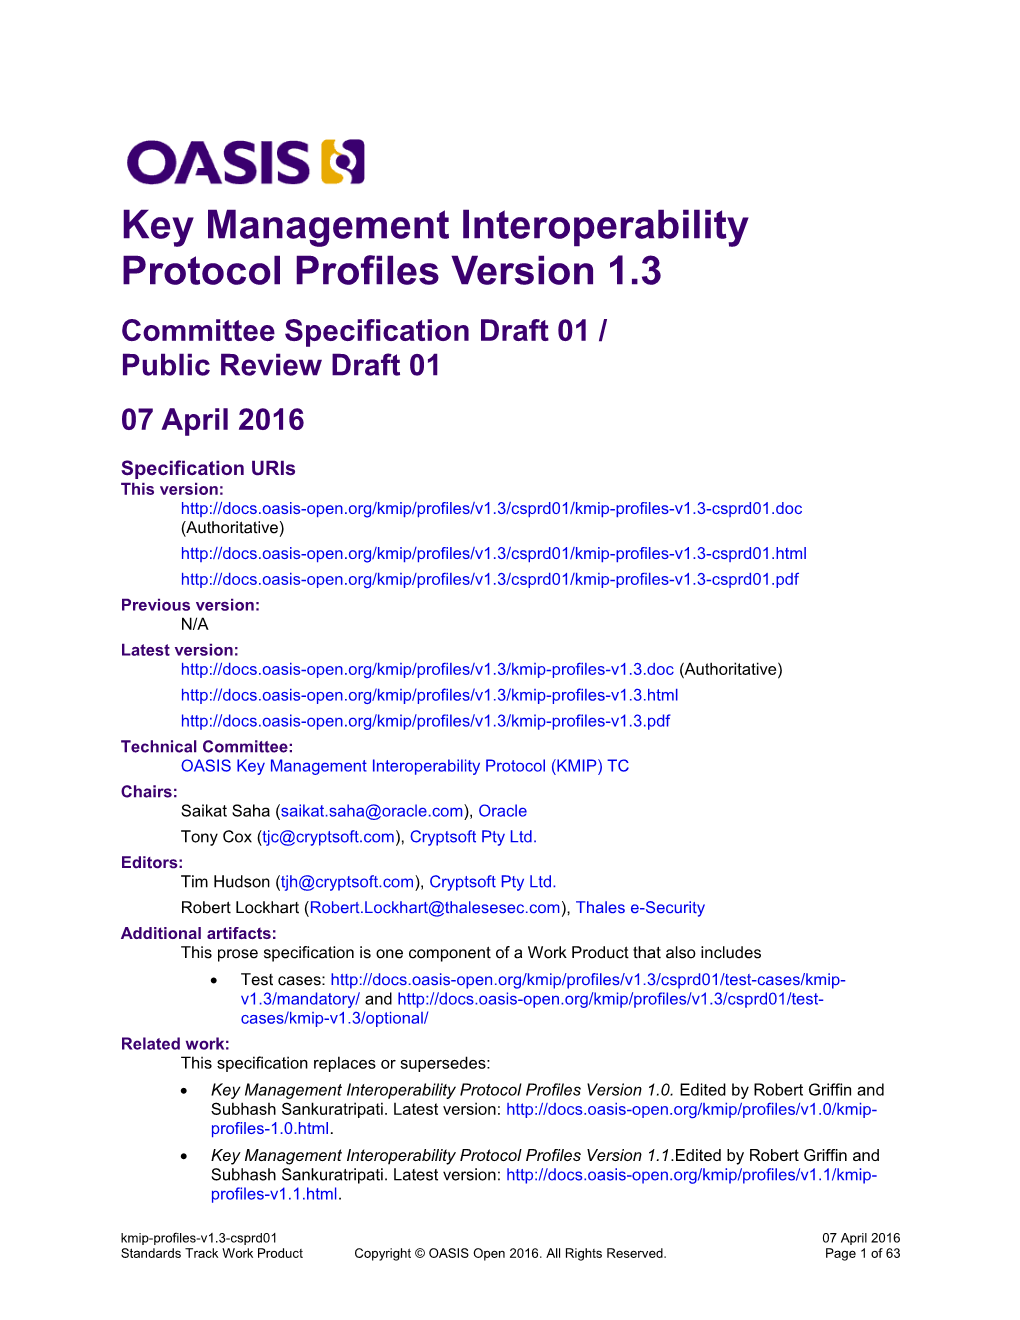 Key Management Interoperability Protocol Profiles Version 1.3